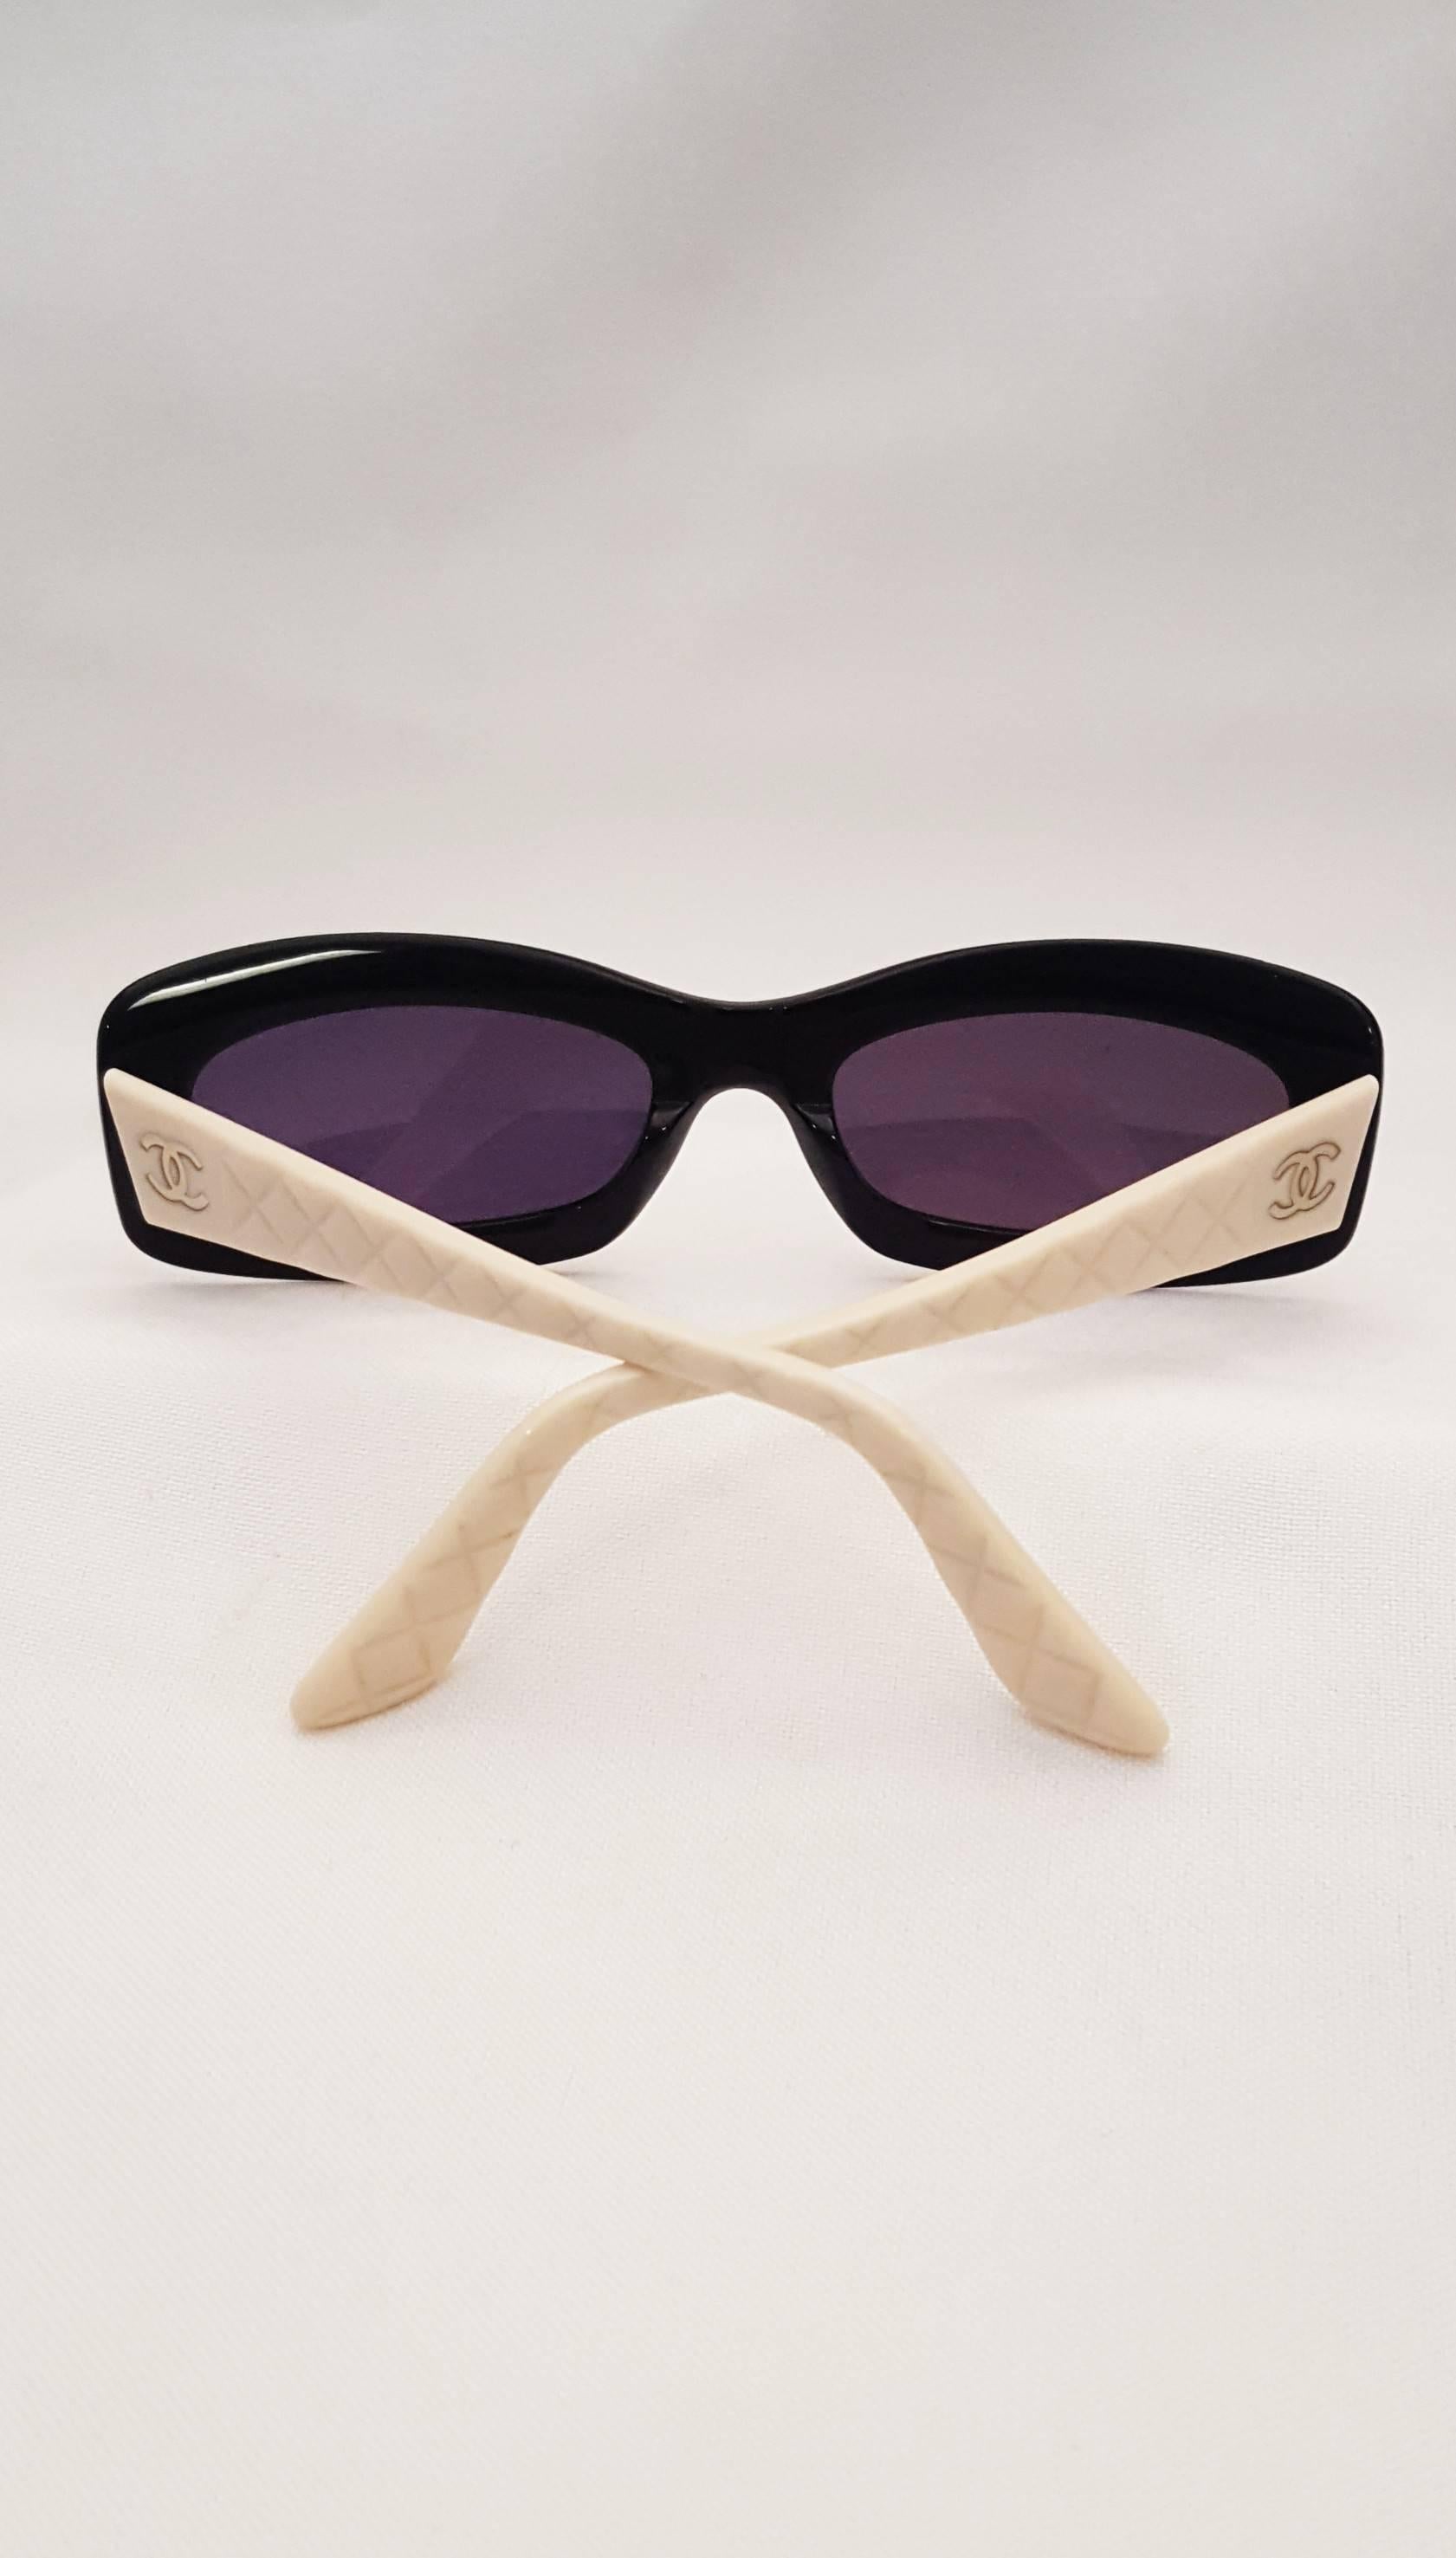 chanel oval sunglasses black beige